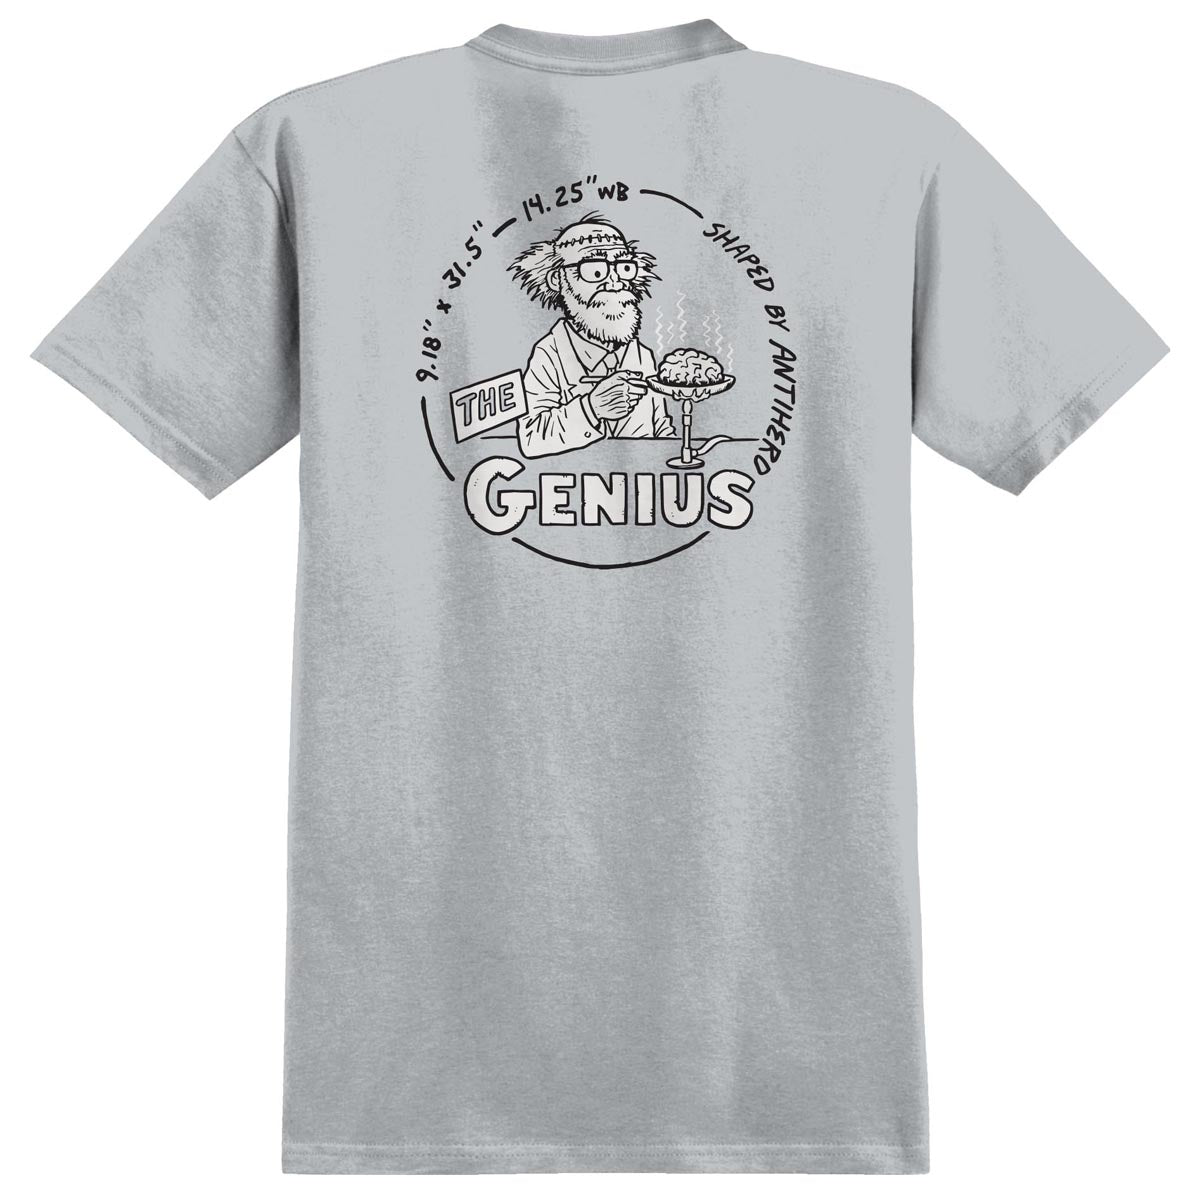 Anti-Hero The Genius T-Shirt - Silver/Grey/Black image 1